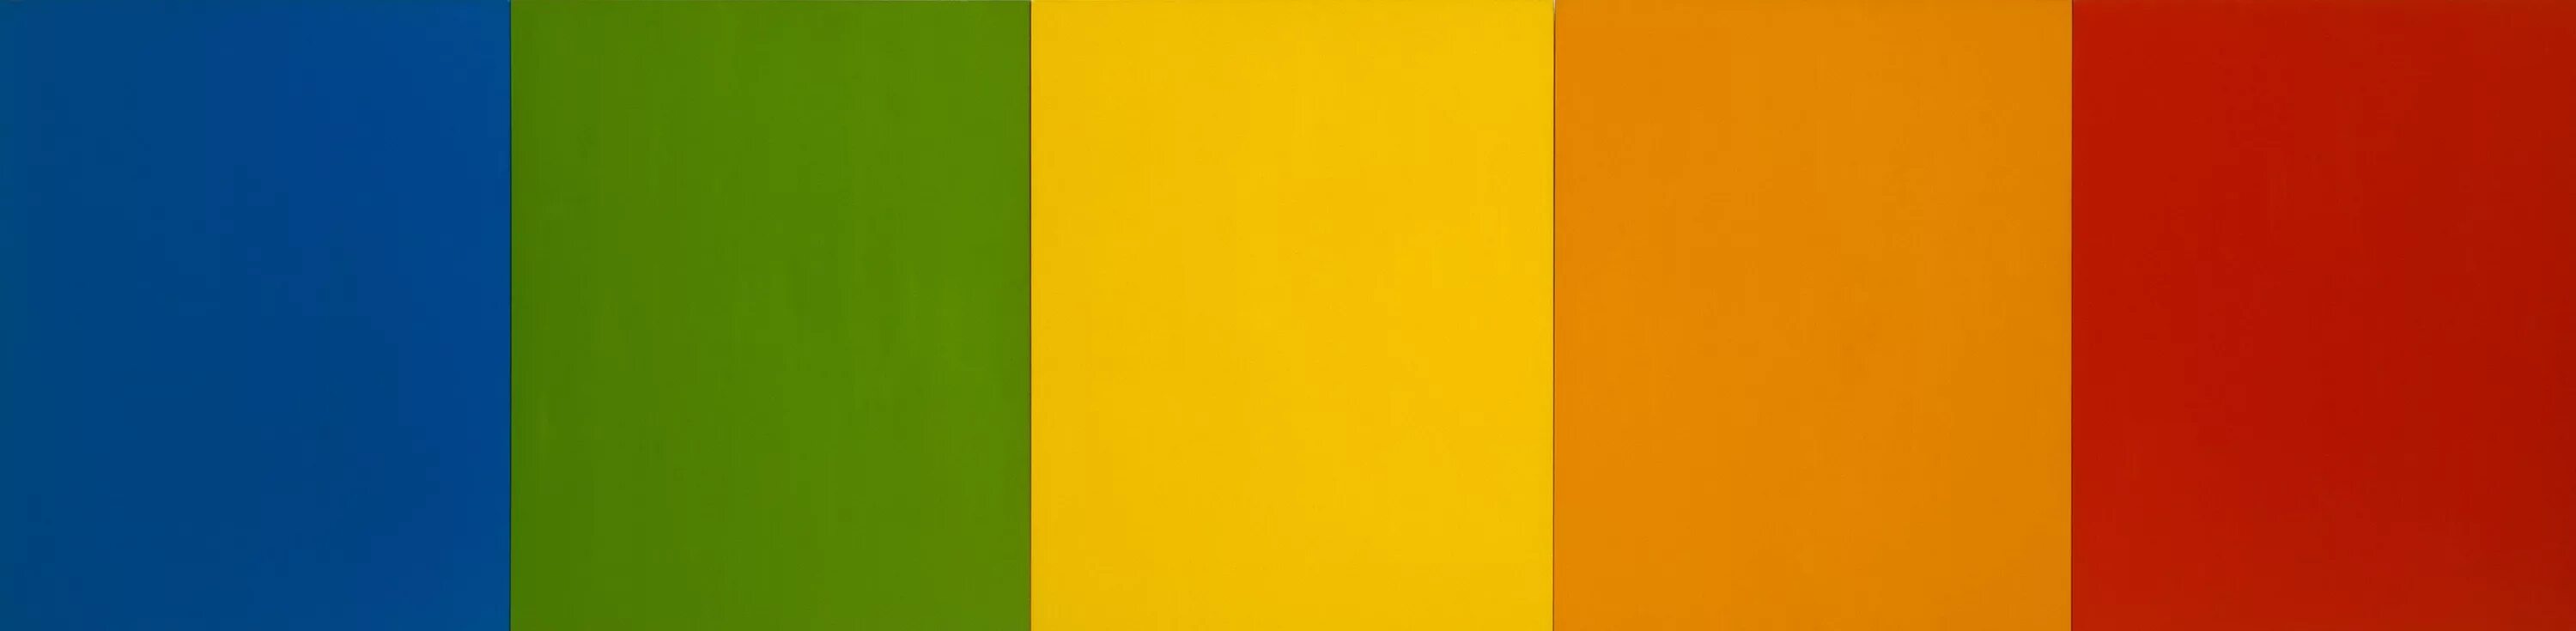 Эльсуорт Келли, «красный, желтый, синий II» (1953). «Красный, желтый, синий II» Эльсуорт Келли. Красный оранжевый желтый зеленый синий. Зеленый оранжевый синий белый.